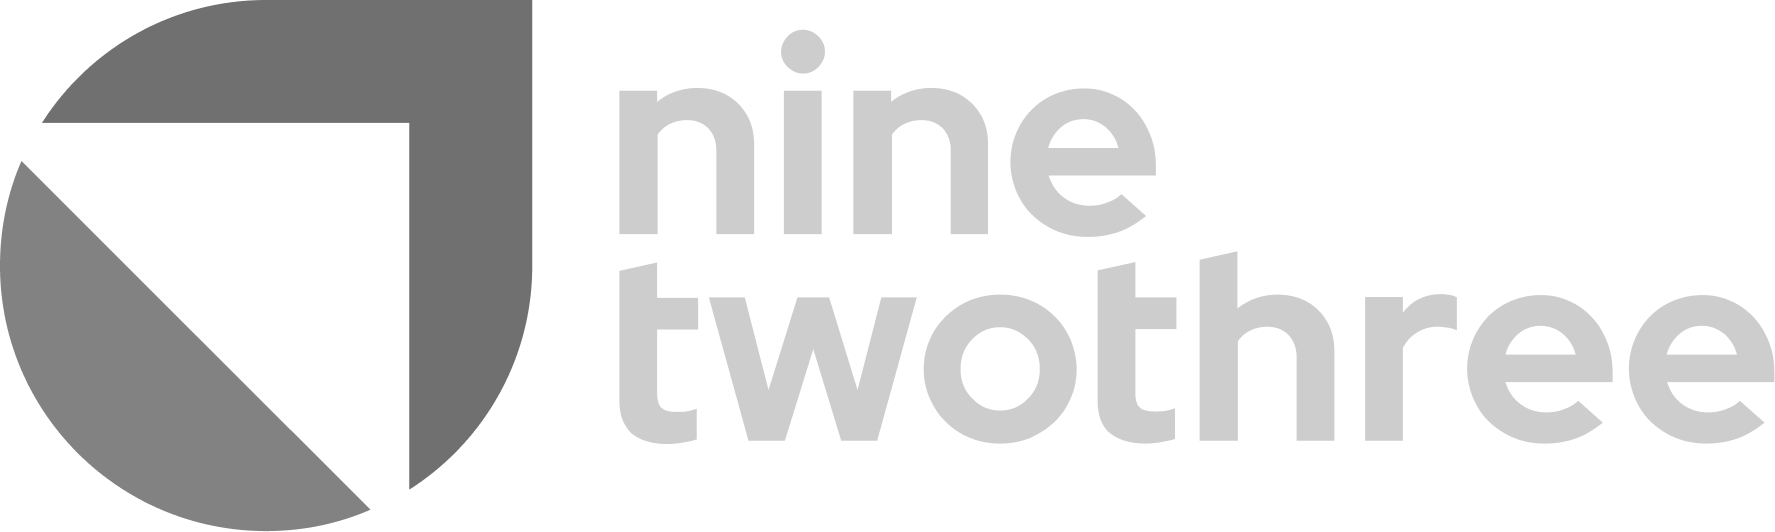 NineTwoThree